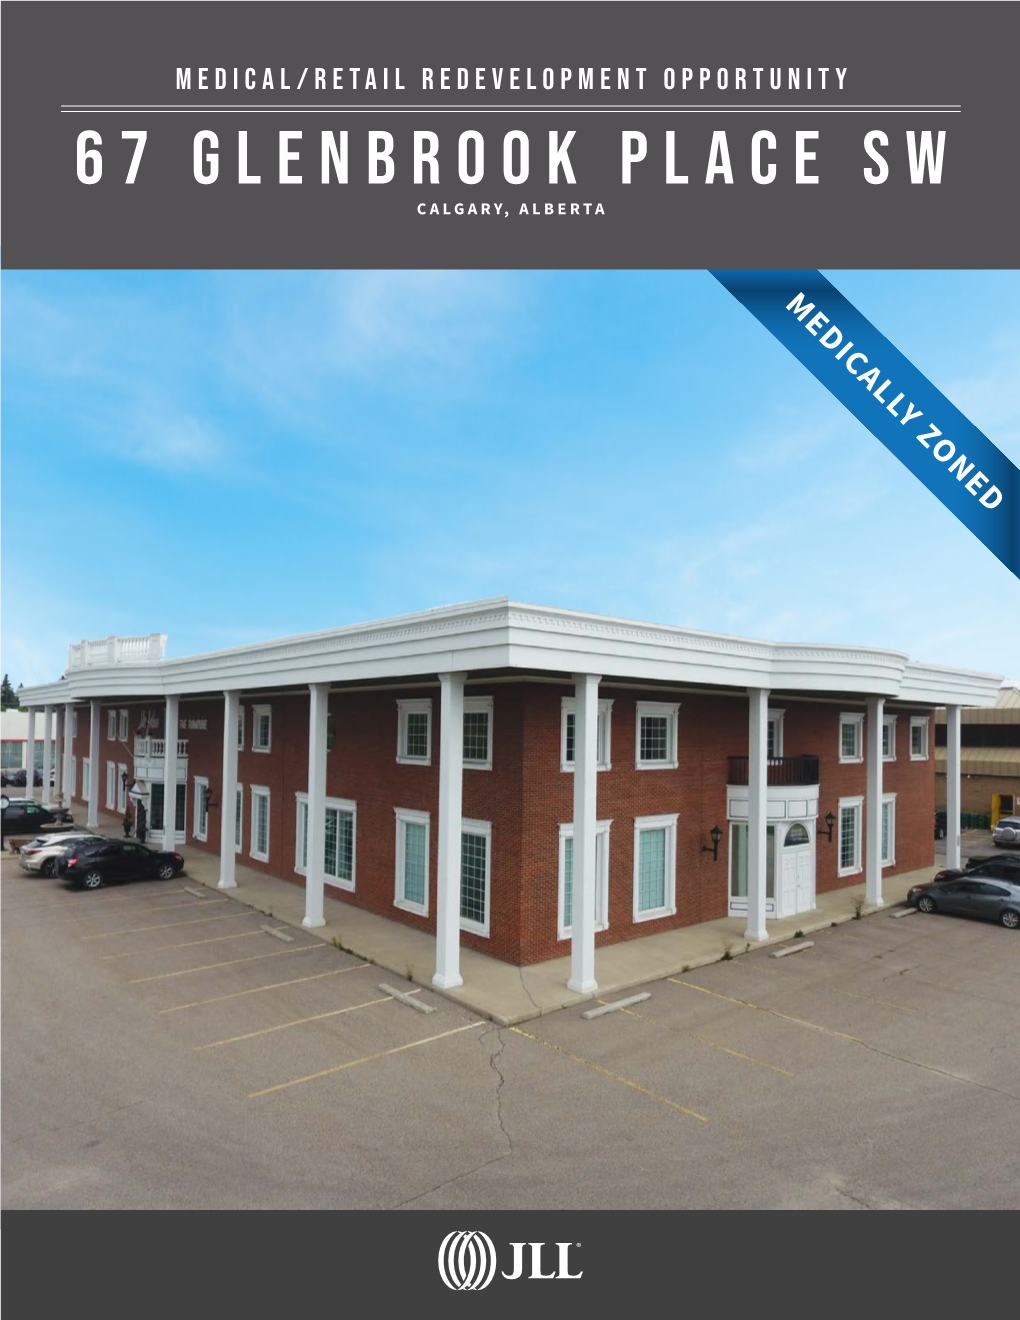 67 Glenbrook Place Sw Calgary, Alberta